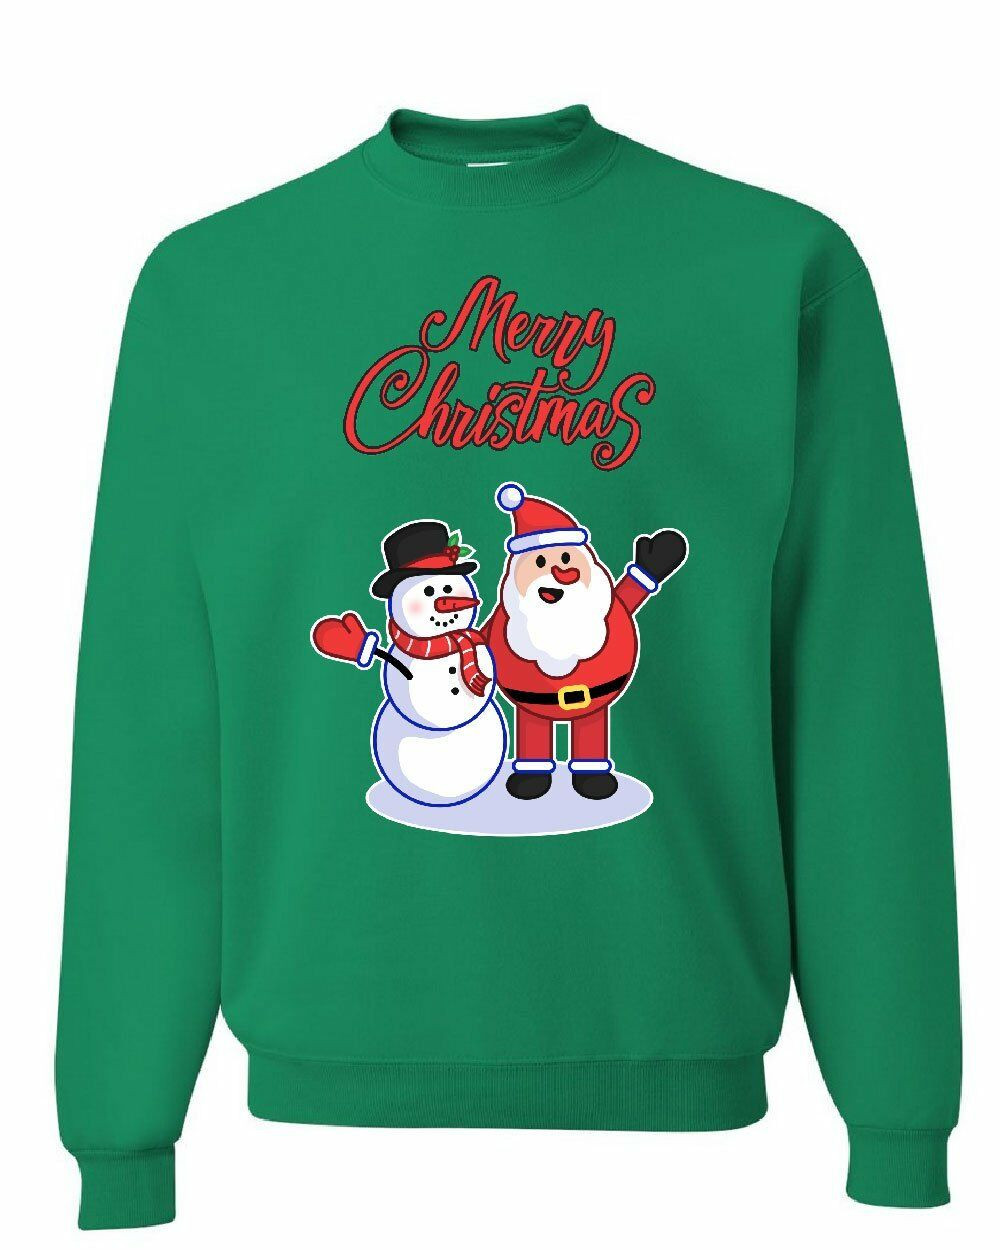 Merry Christmas Santa Snowman Hug Sweatshirt Style: Sweatshirt, Color: Green